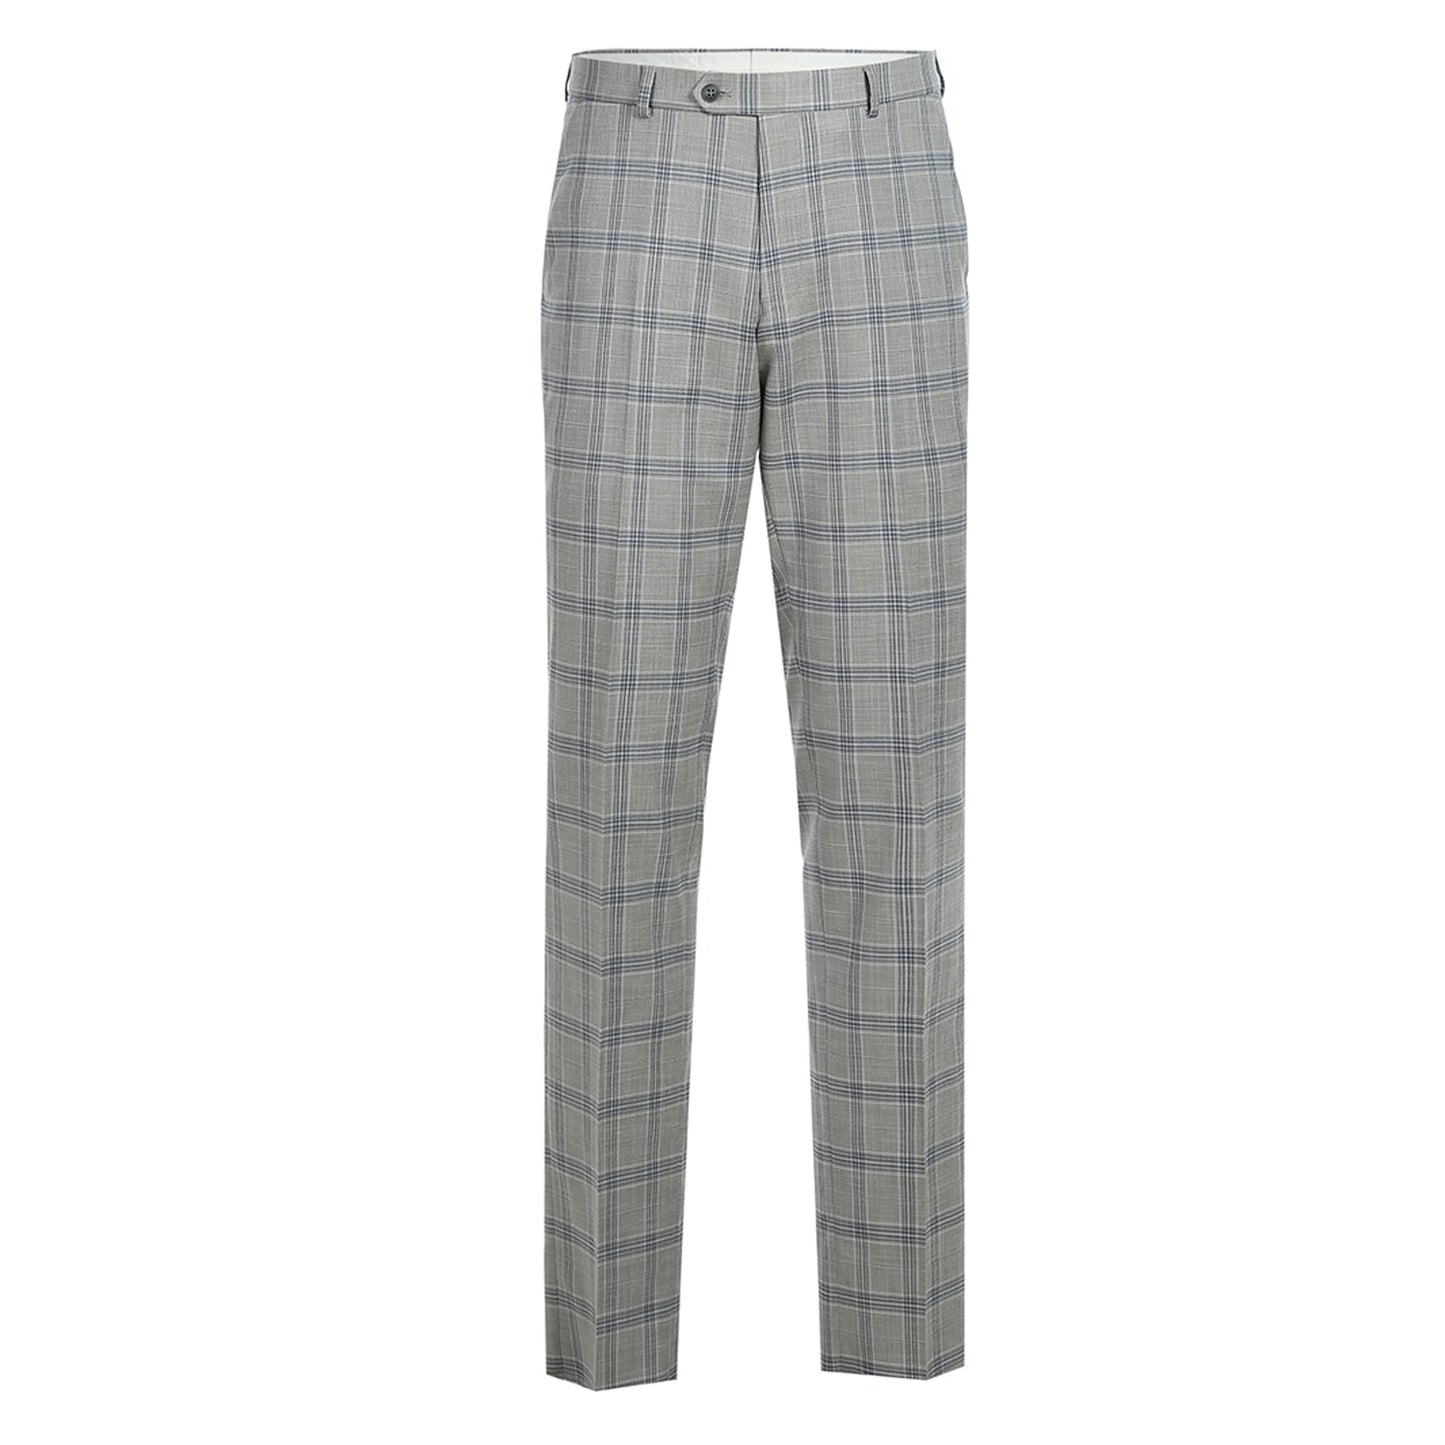 293-15 Men's Slim Fit Notch Lapel Light Gray and Blue Windowpane Suit